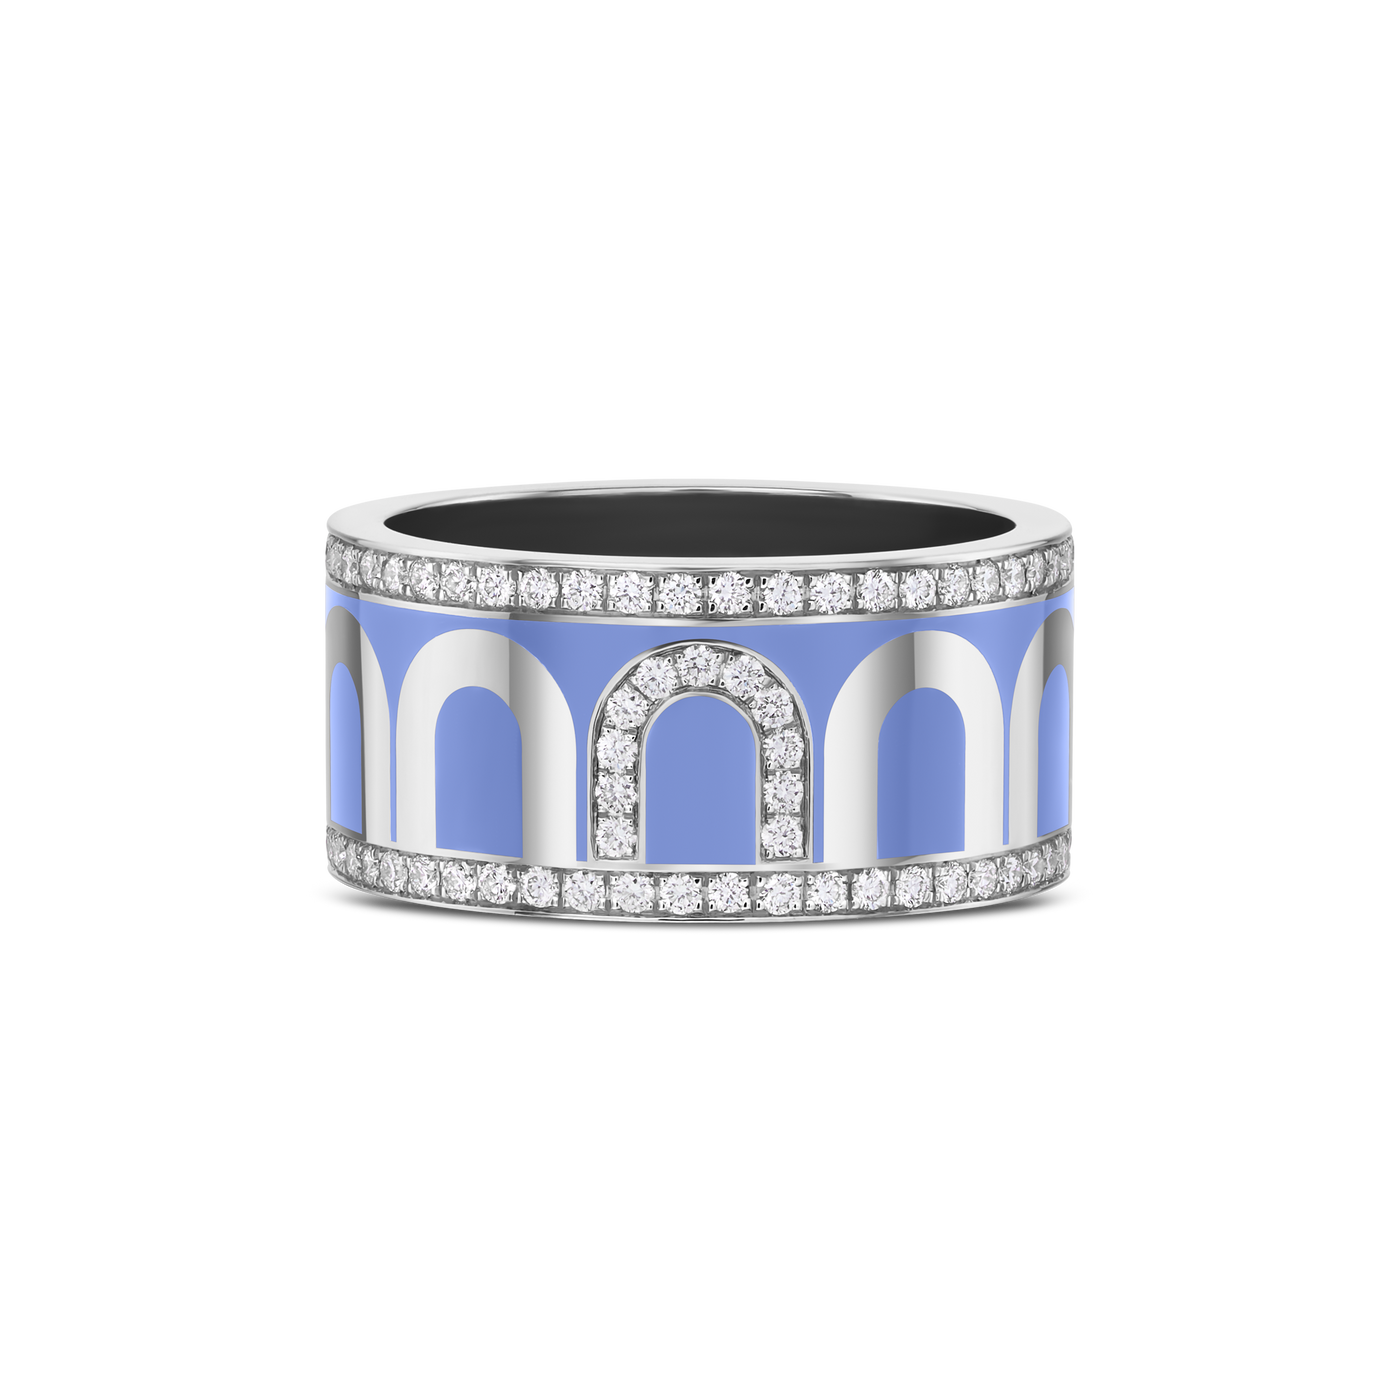 L'Arc de DAVIDOR Ring GM, 18k White Gold with Hortensia Lacquered Ceramic and Porta Diamonds - DAVIDOR